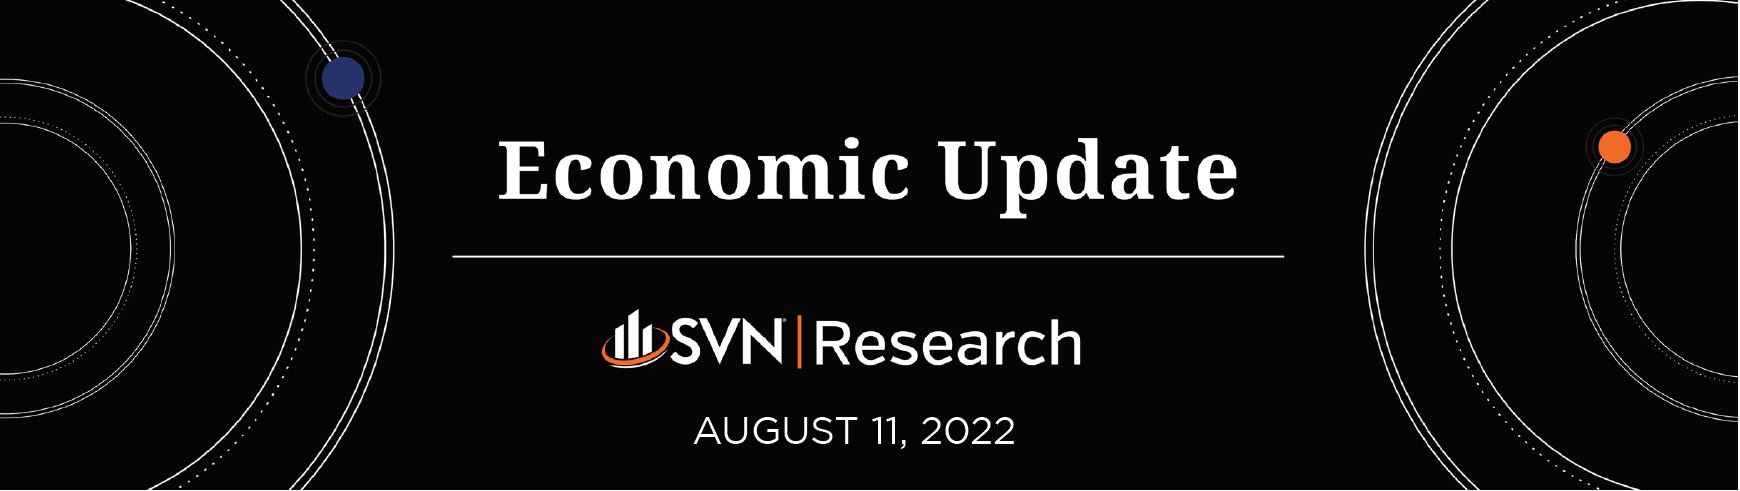 SVN | Research Economic Update 8.11.2022